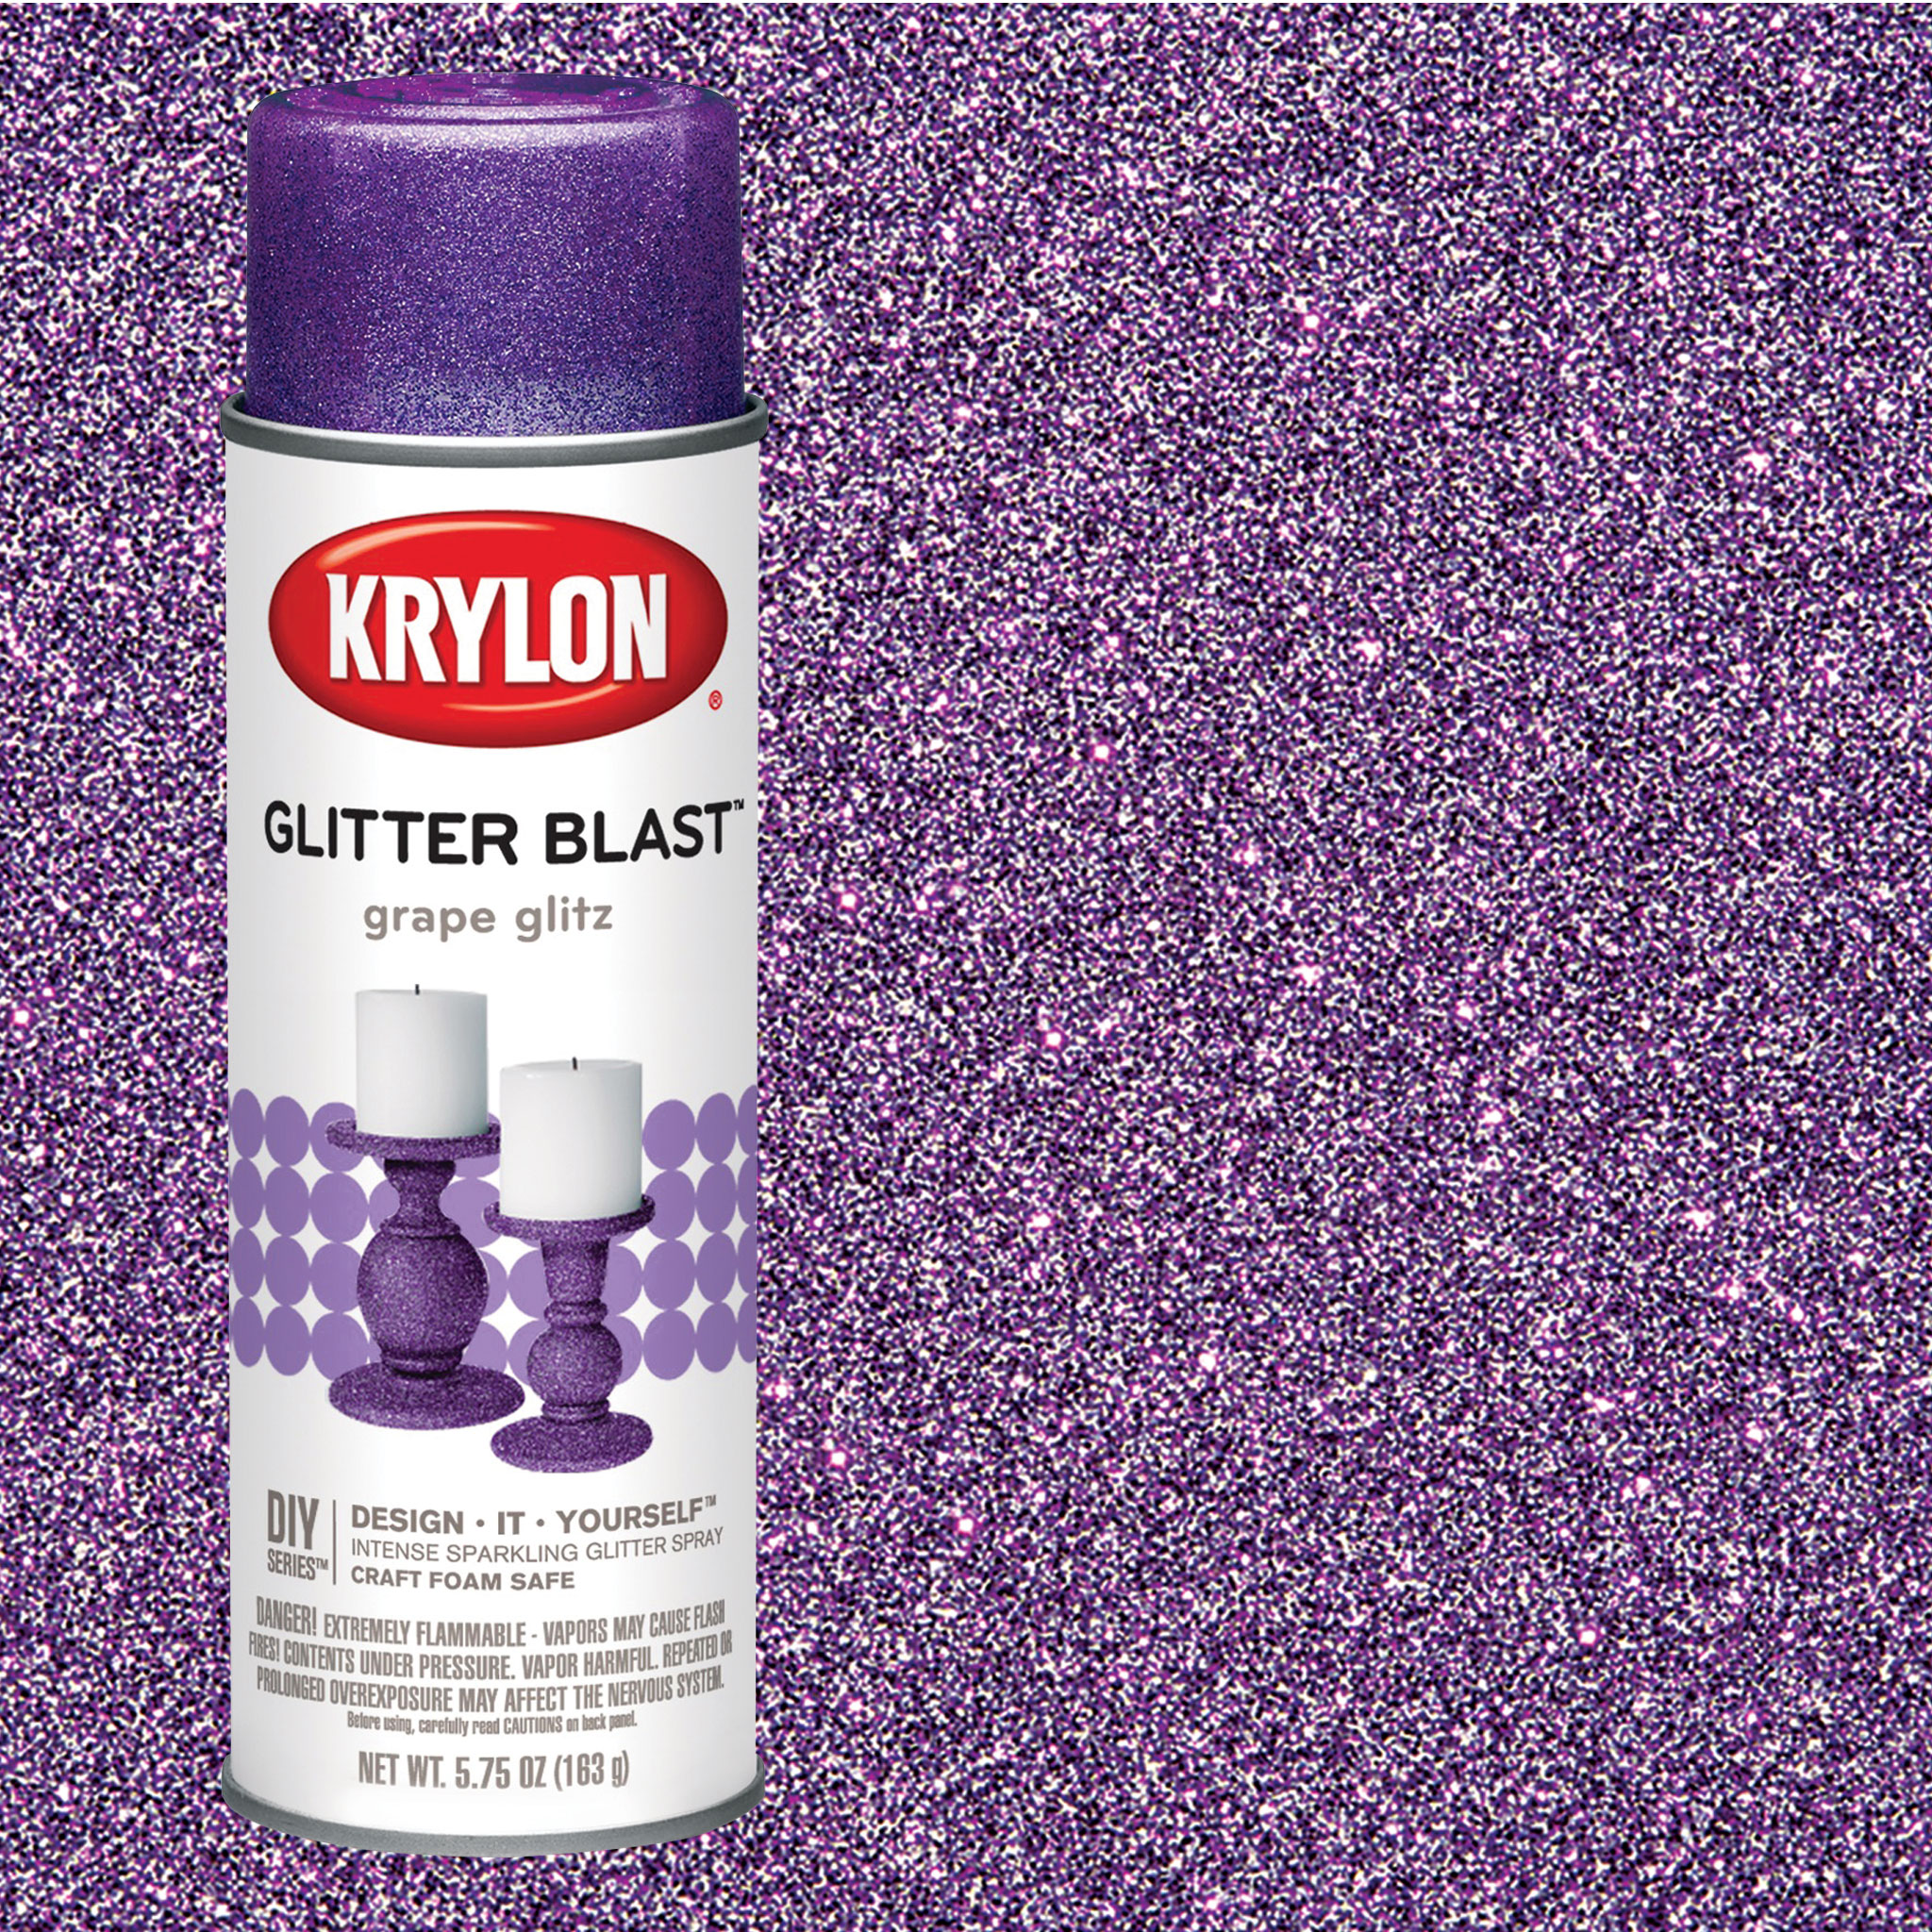 Glitter Spray Paint - The Craft Shop, Inc.